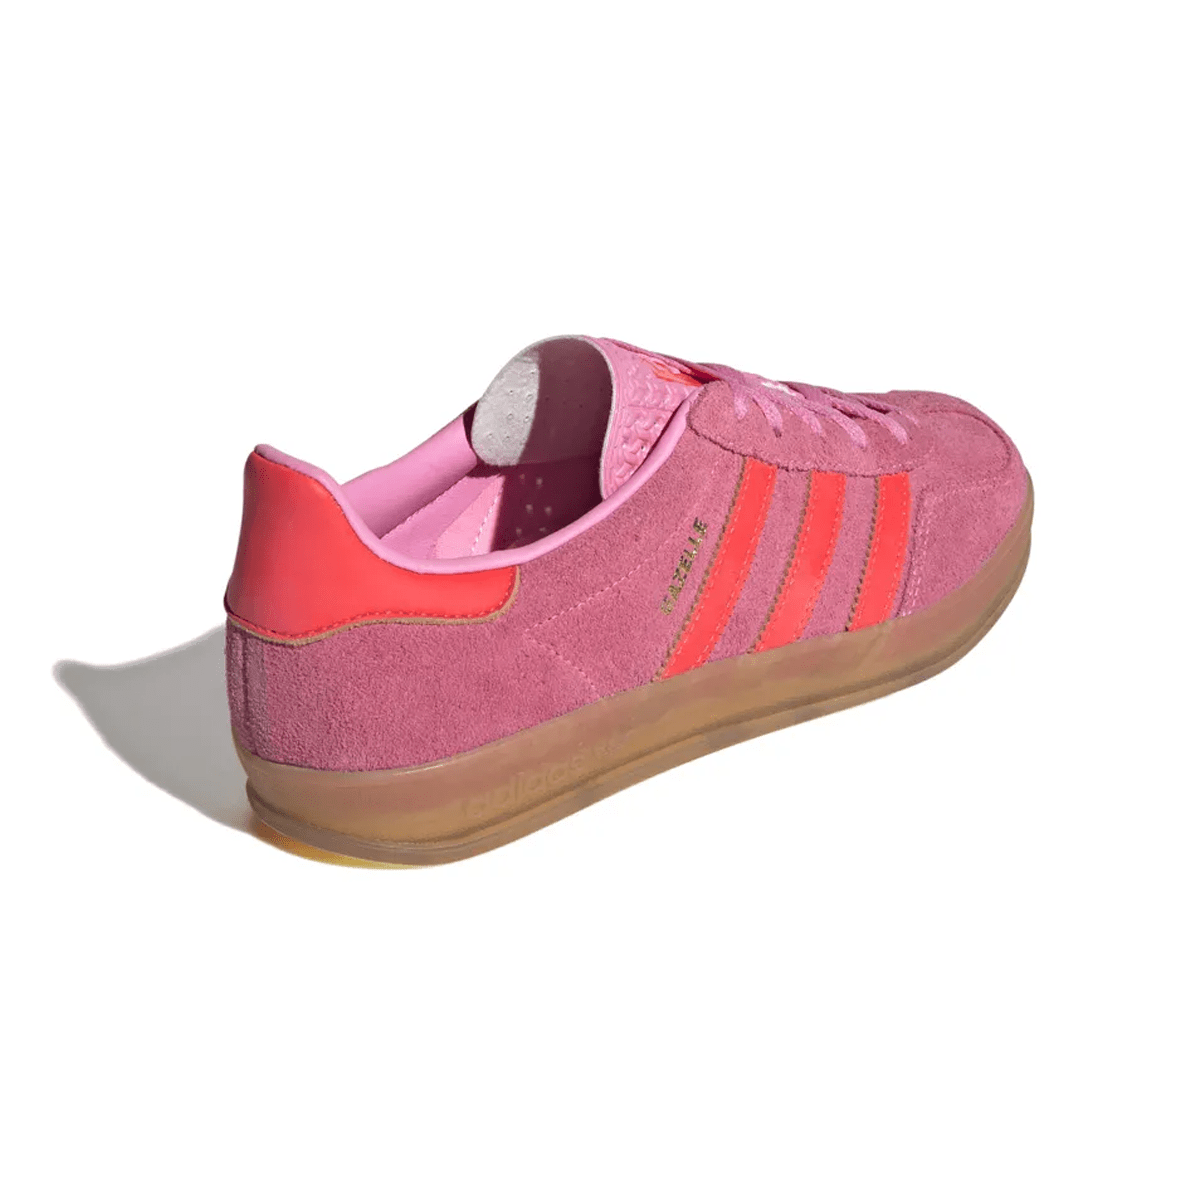 Adidas Gazelle Indoor Rosa/Vermelho "Beam Pink Solar Red" Adidas Gazelle Indoor Blizz Sneakers 